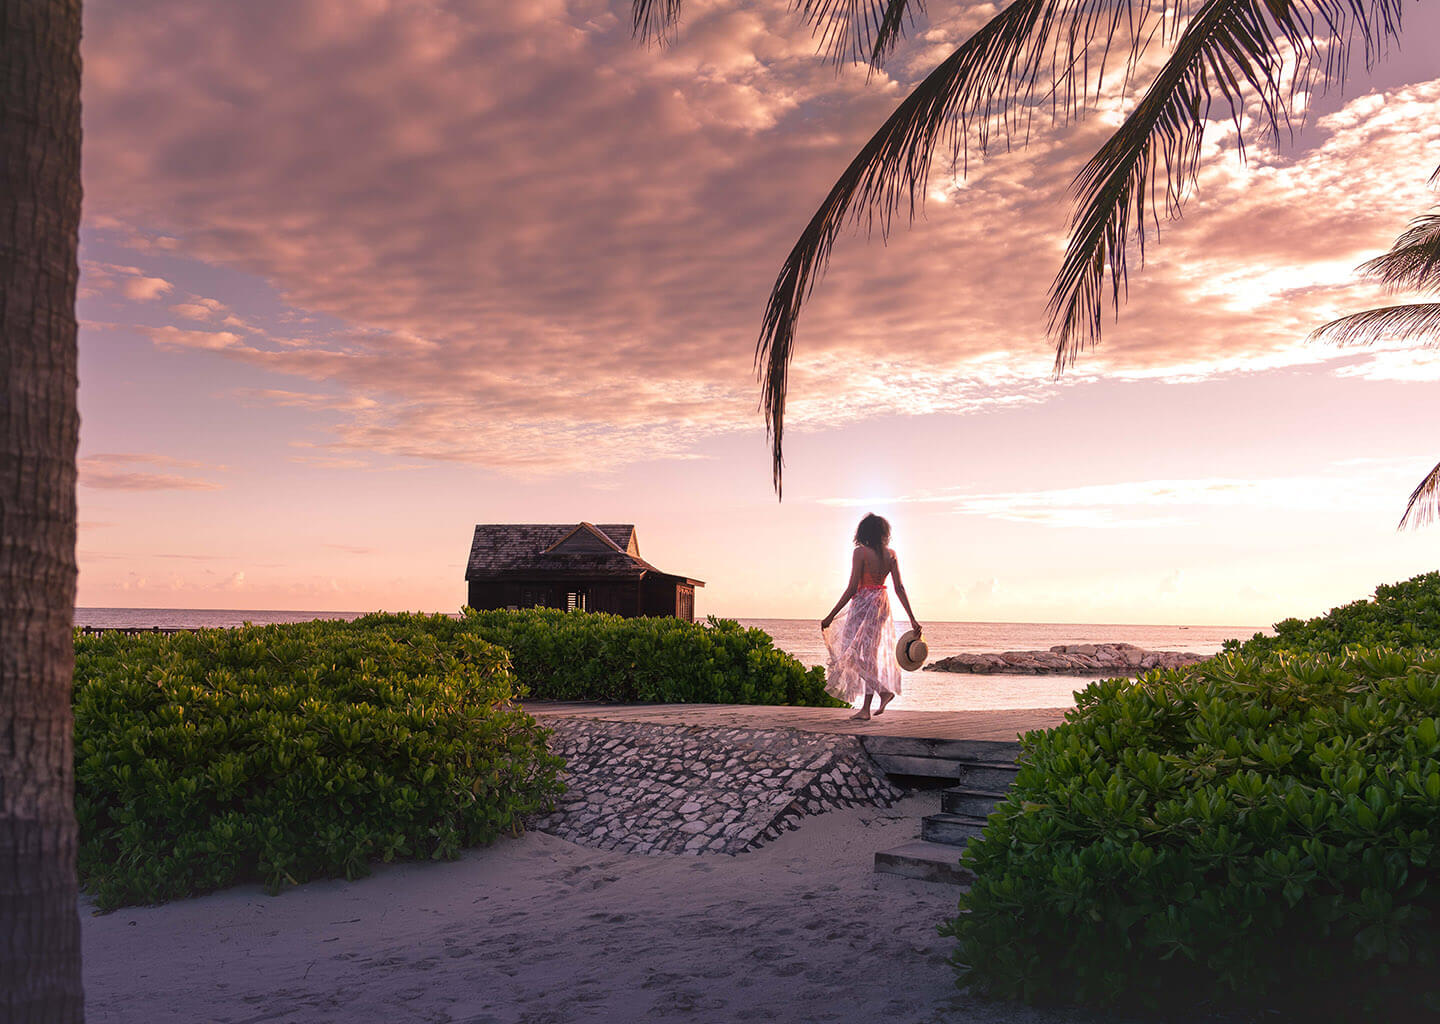 Woman taking a cabana walk at sunset